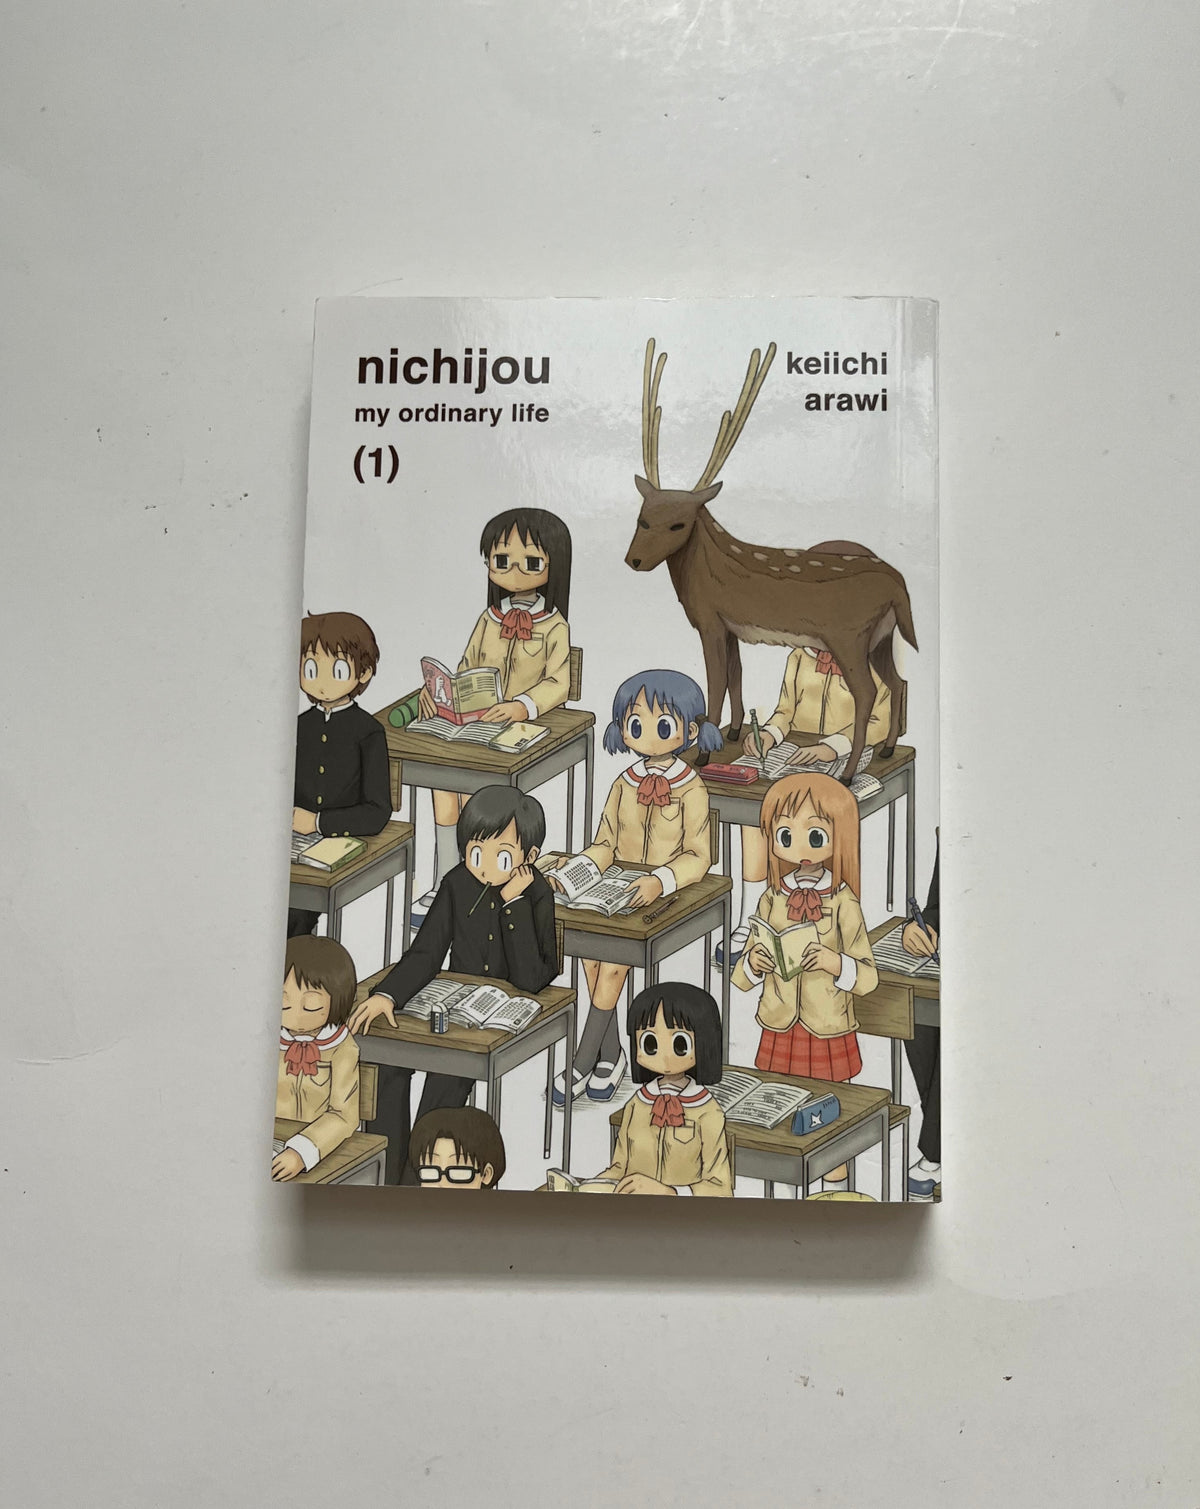 Nichijou: My Ordinary Life by Keiichi Arawi